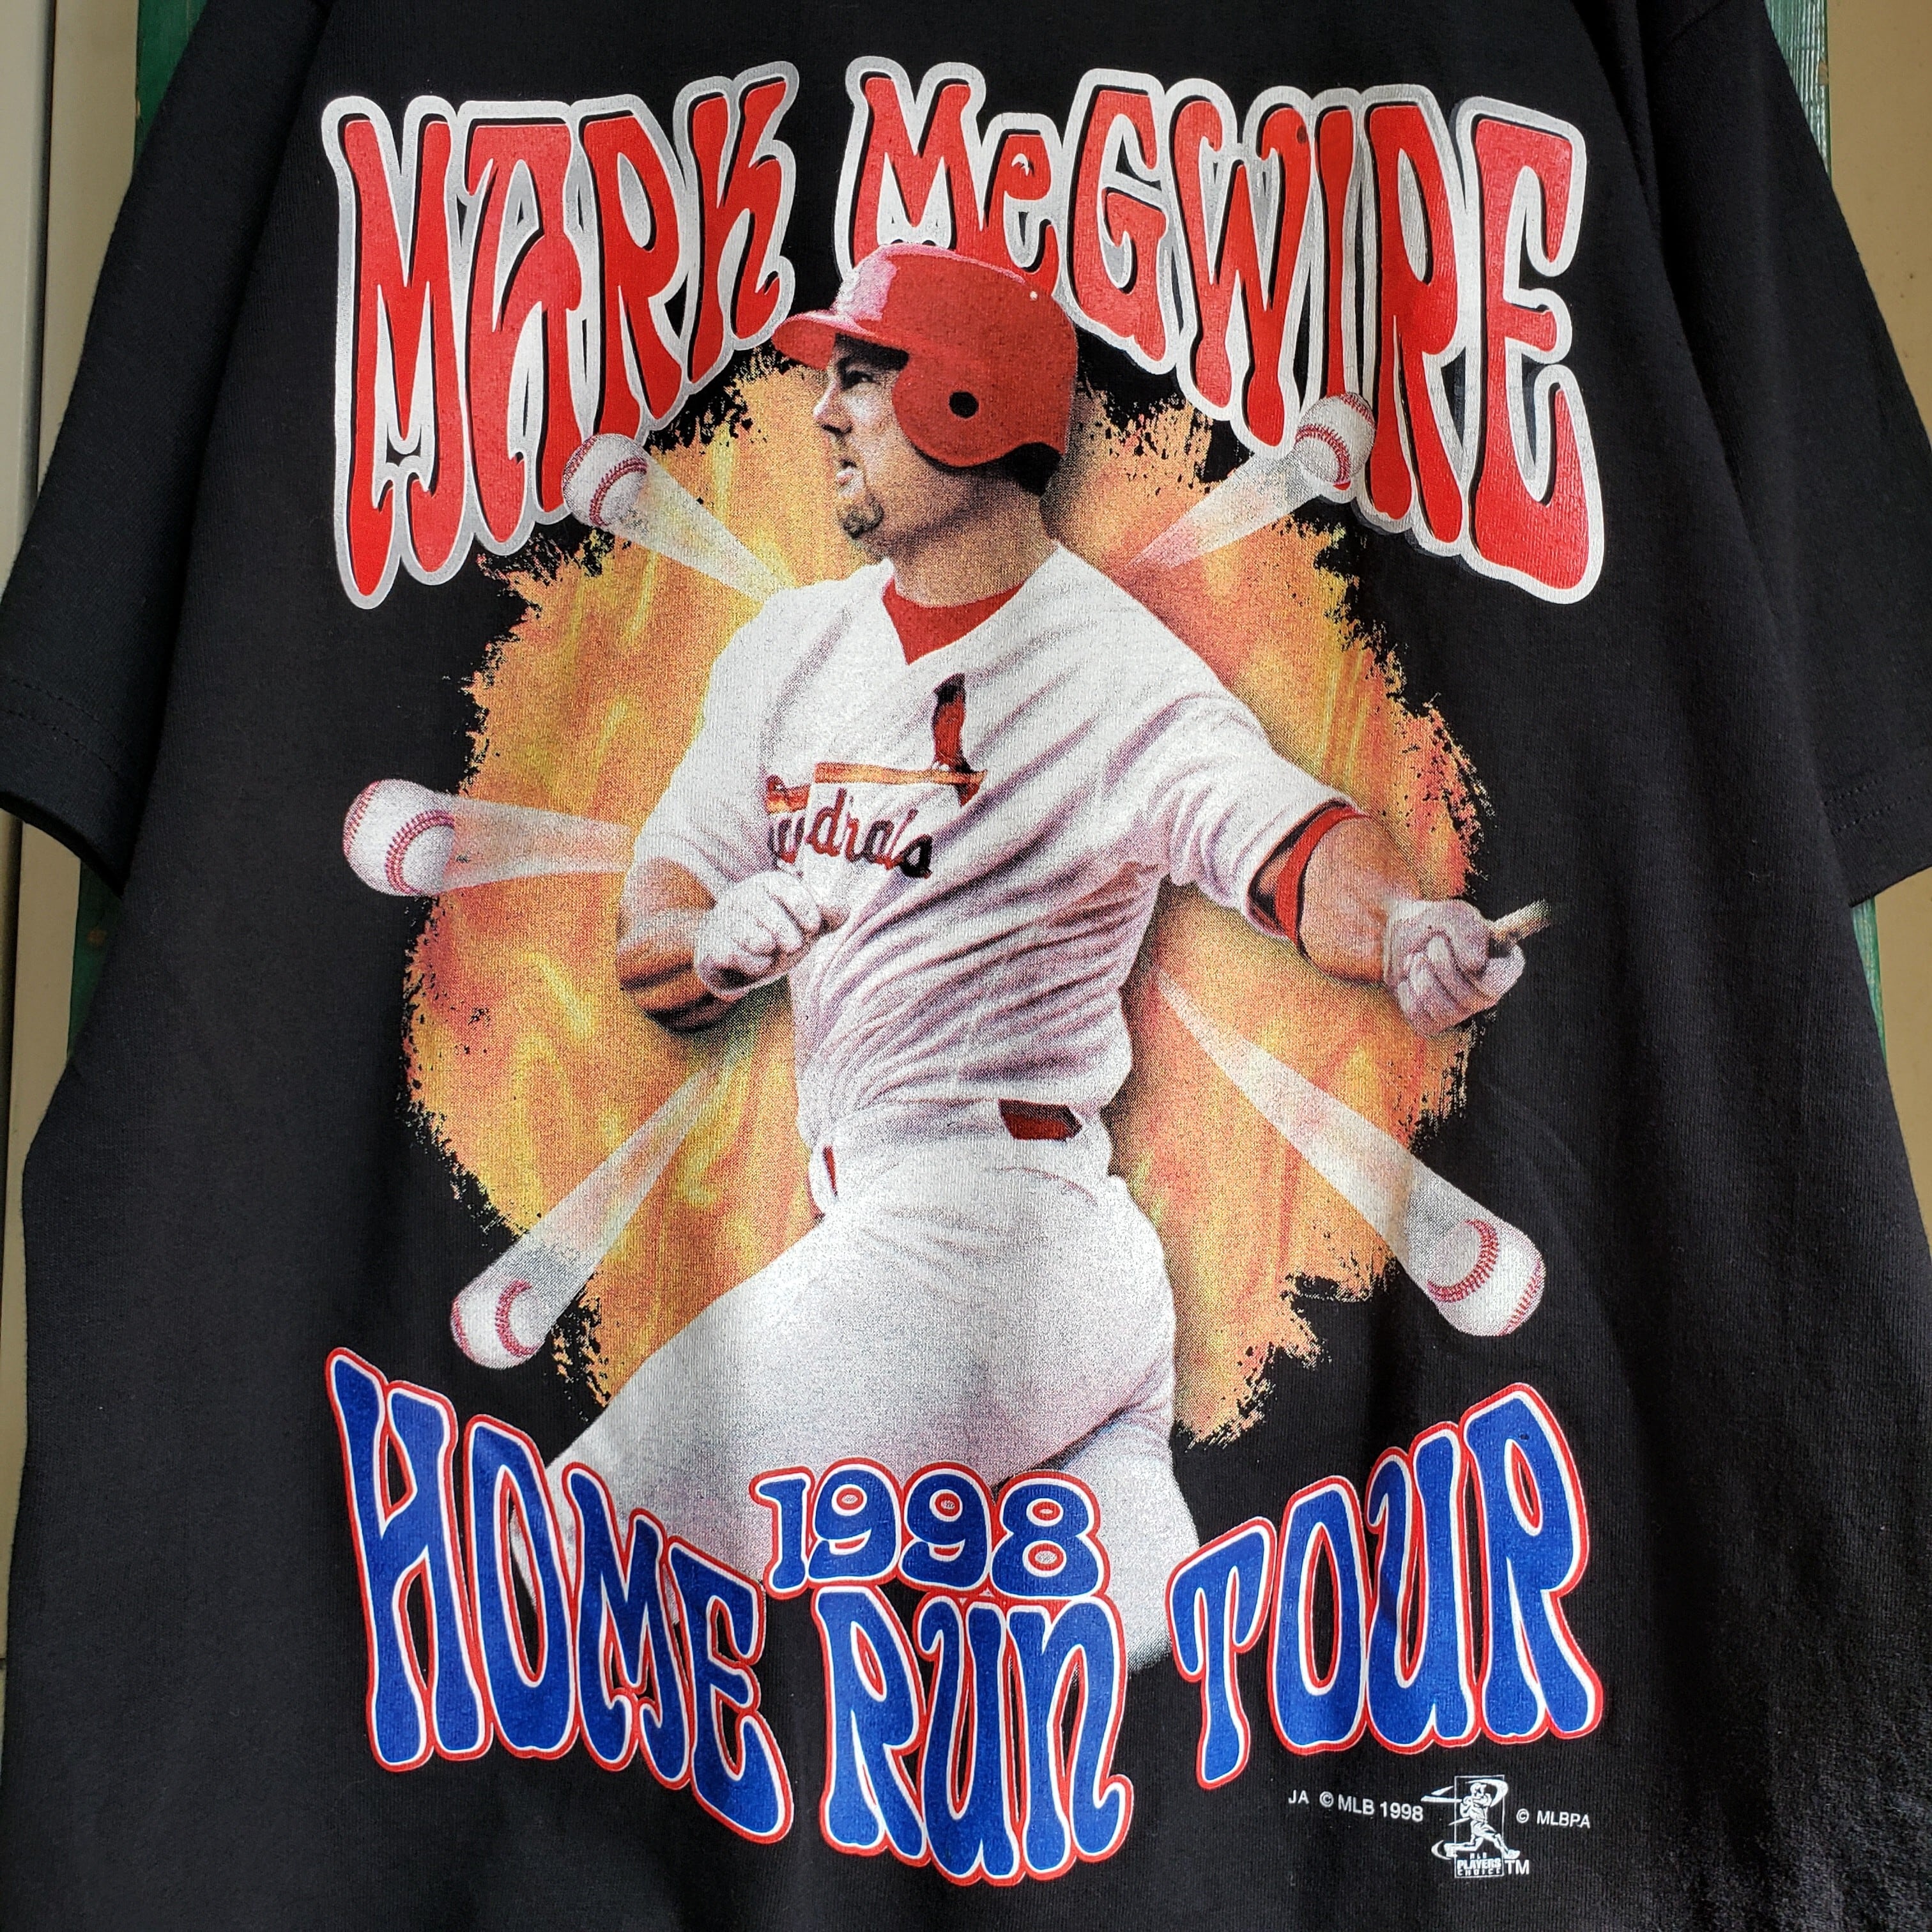 MLB "St. Louis Cardinals" Mark McGwire HOME RUN TOUR T shirt